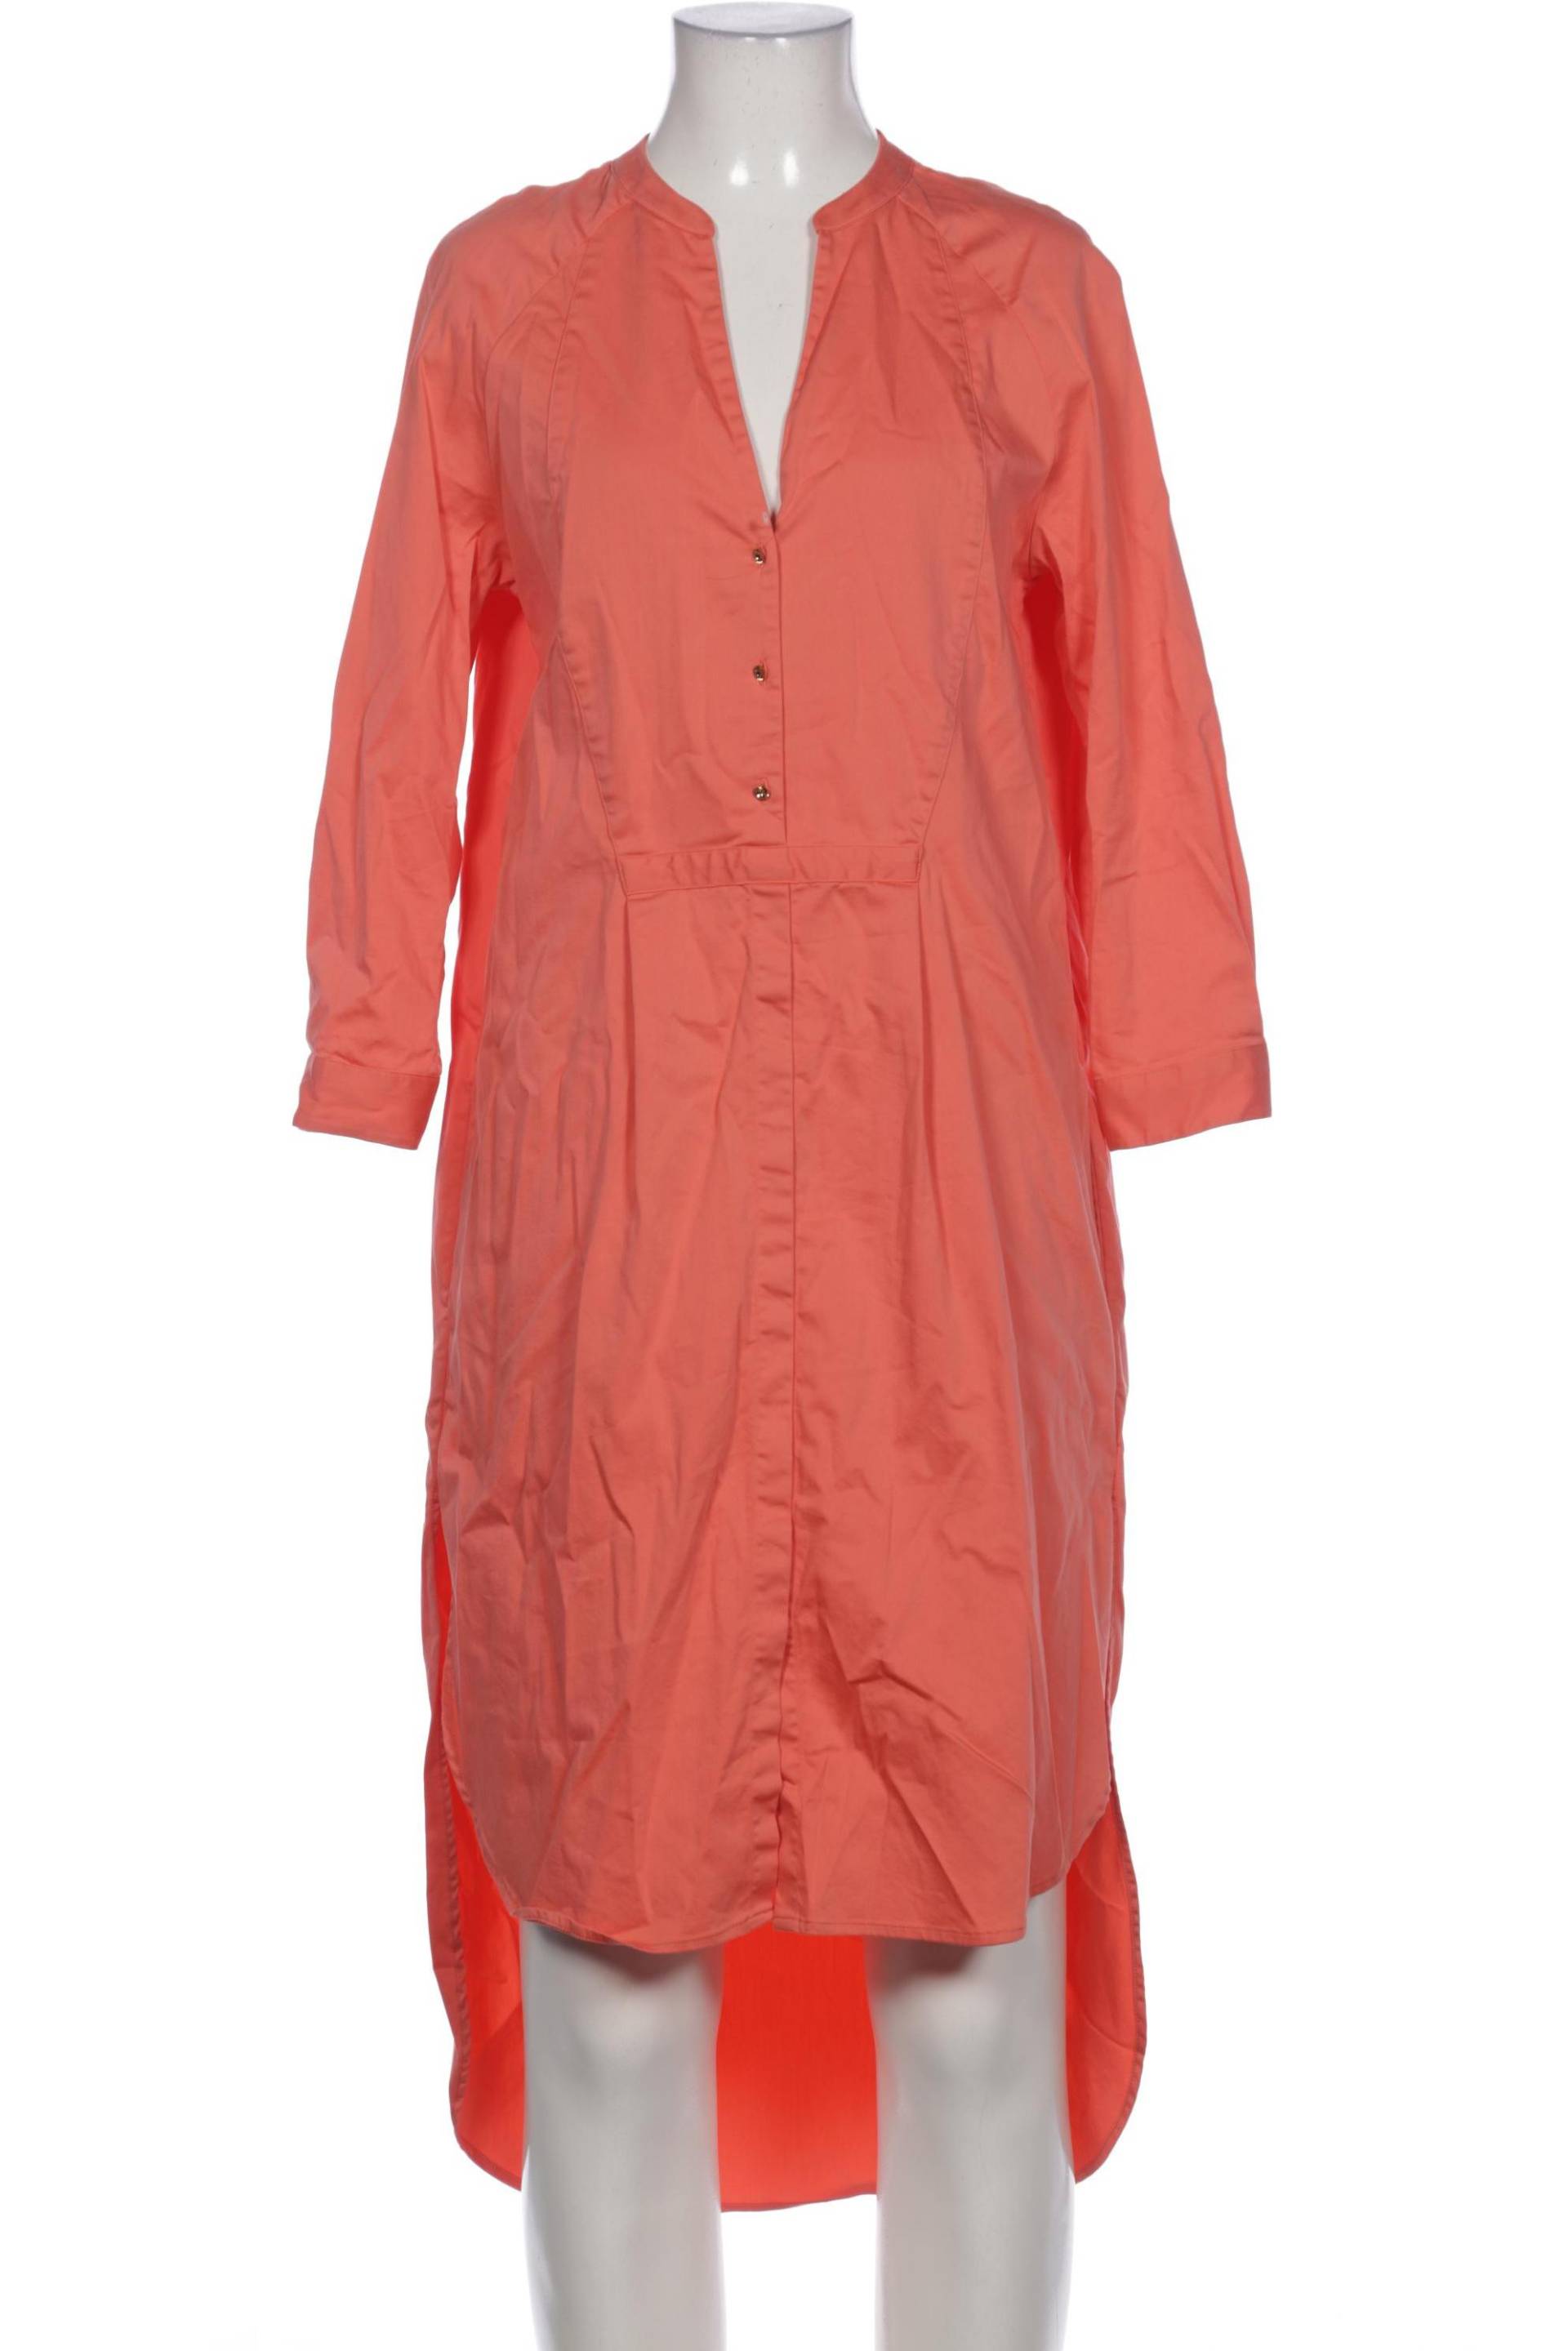 Massimo Dutti Damen Kleid, pink von Massimo Dutti